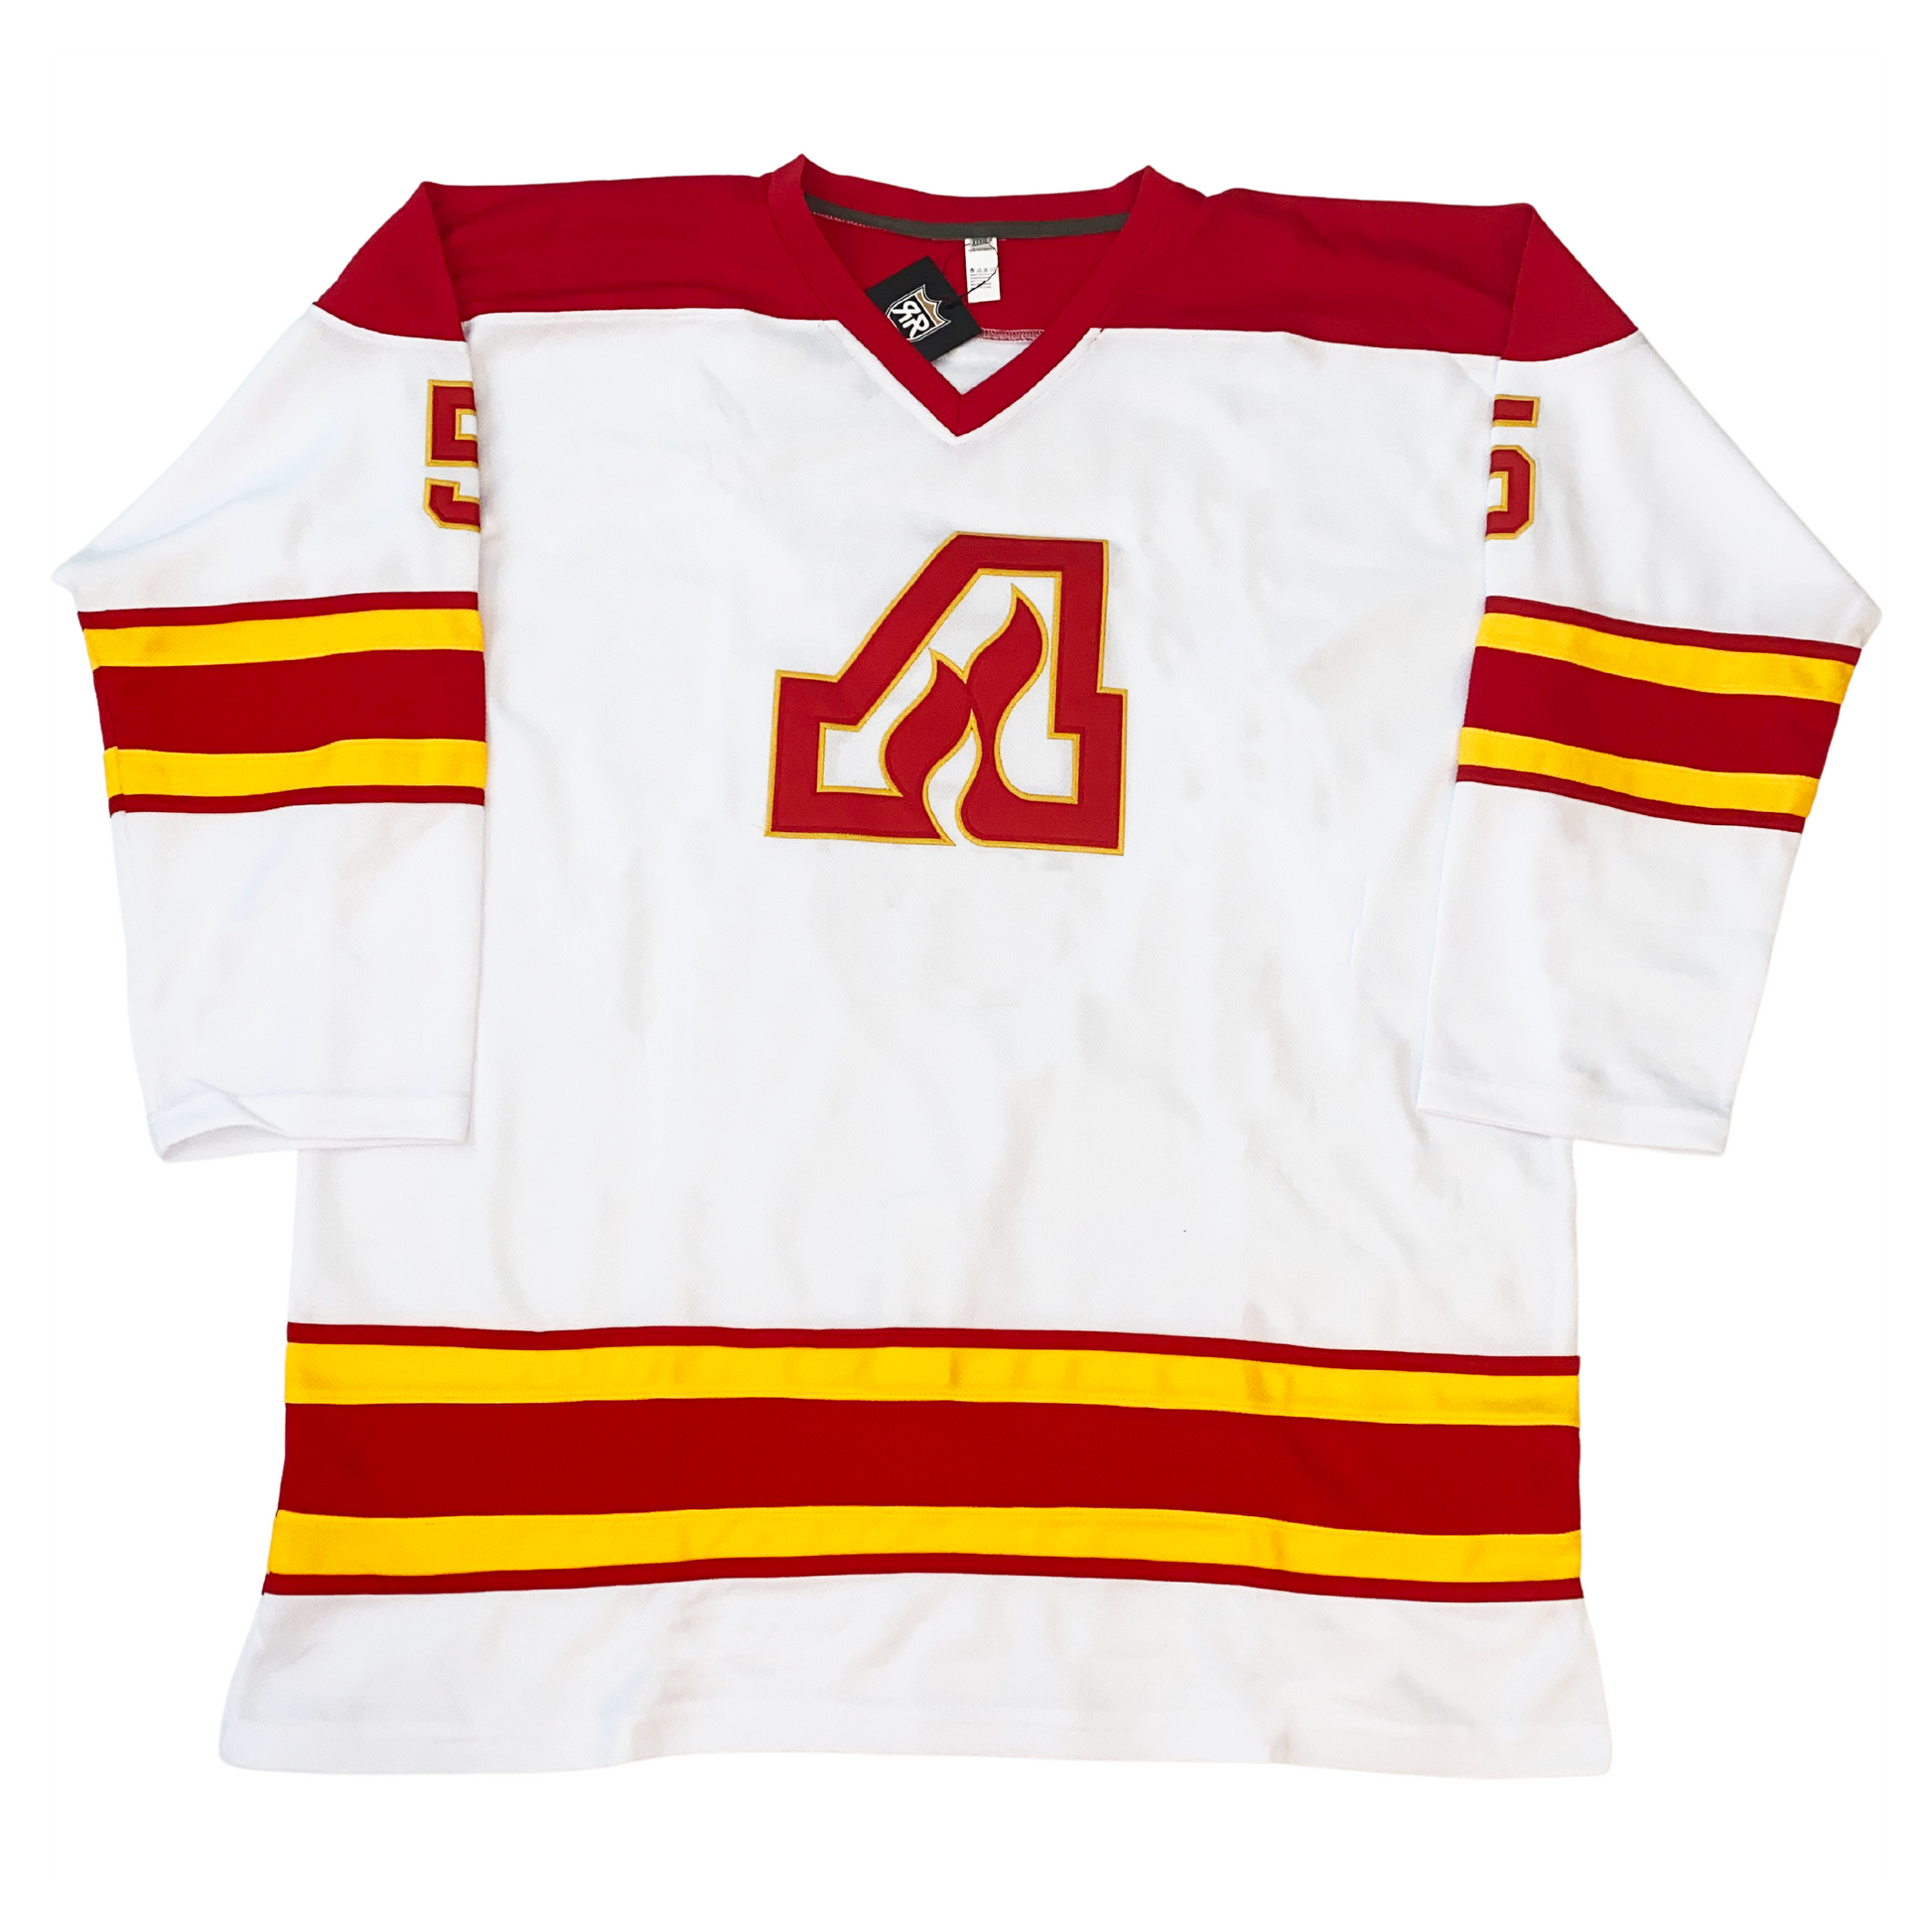 Another look at the Atlanta Flames warmup jerseys Calgary wore